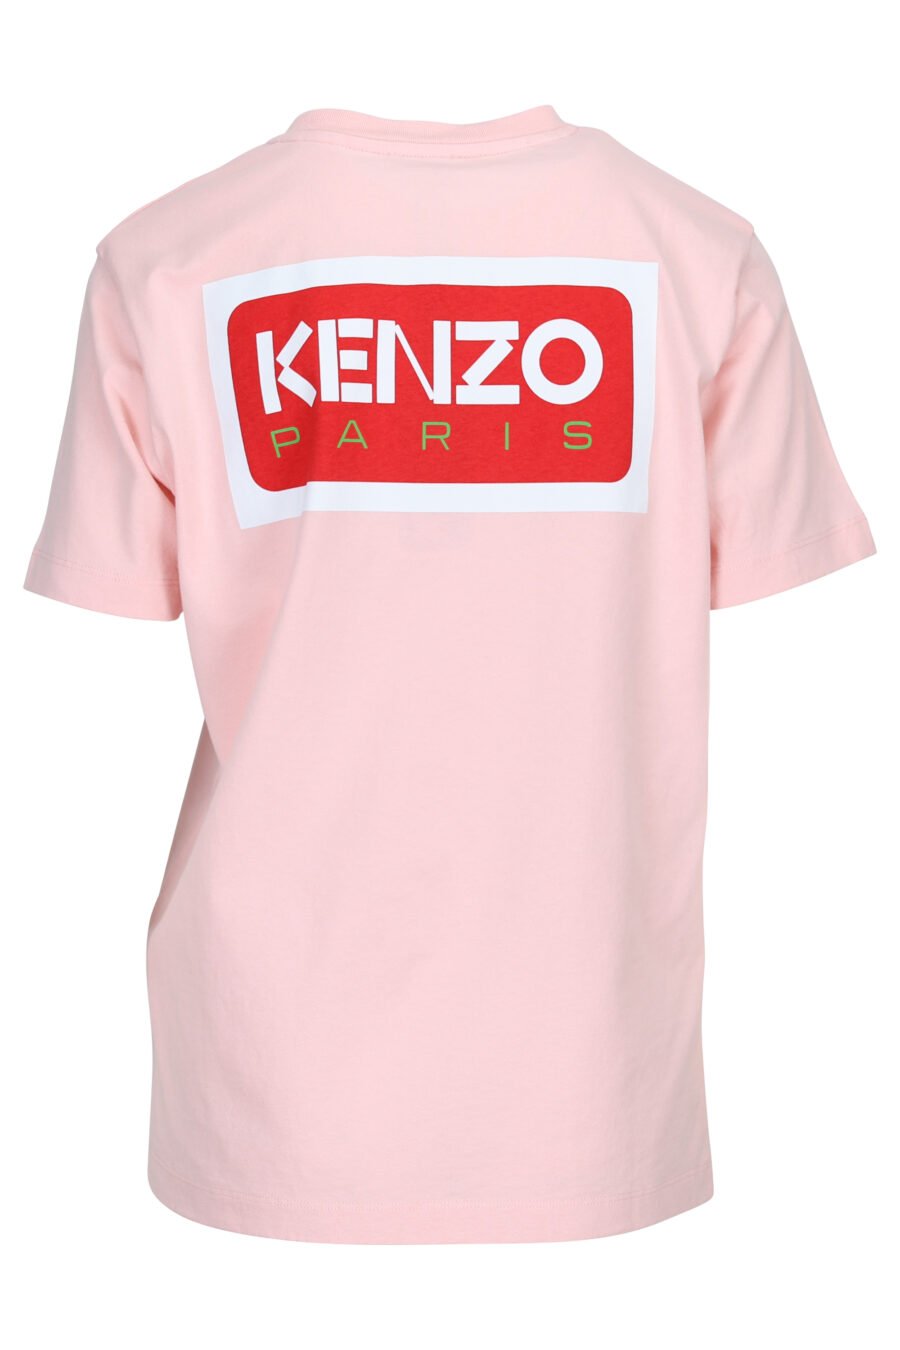 T-shirt oversize rose avec logo "kenzo paris" - 3612230520752 1